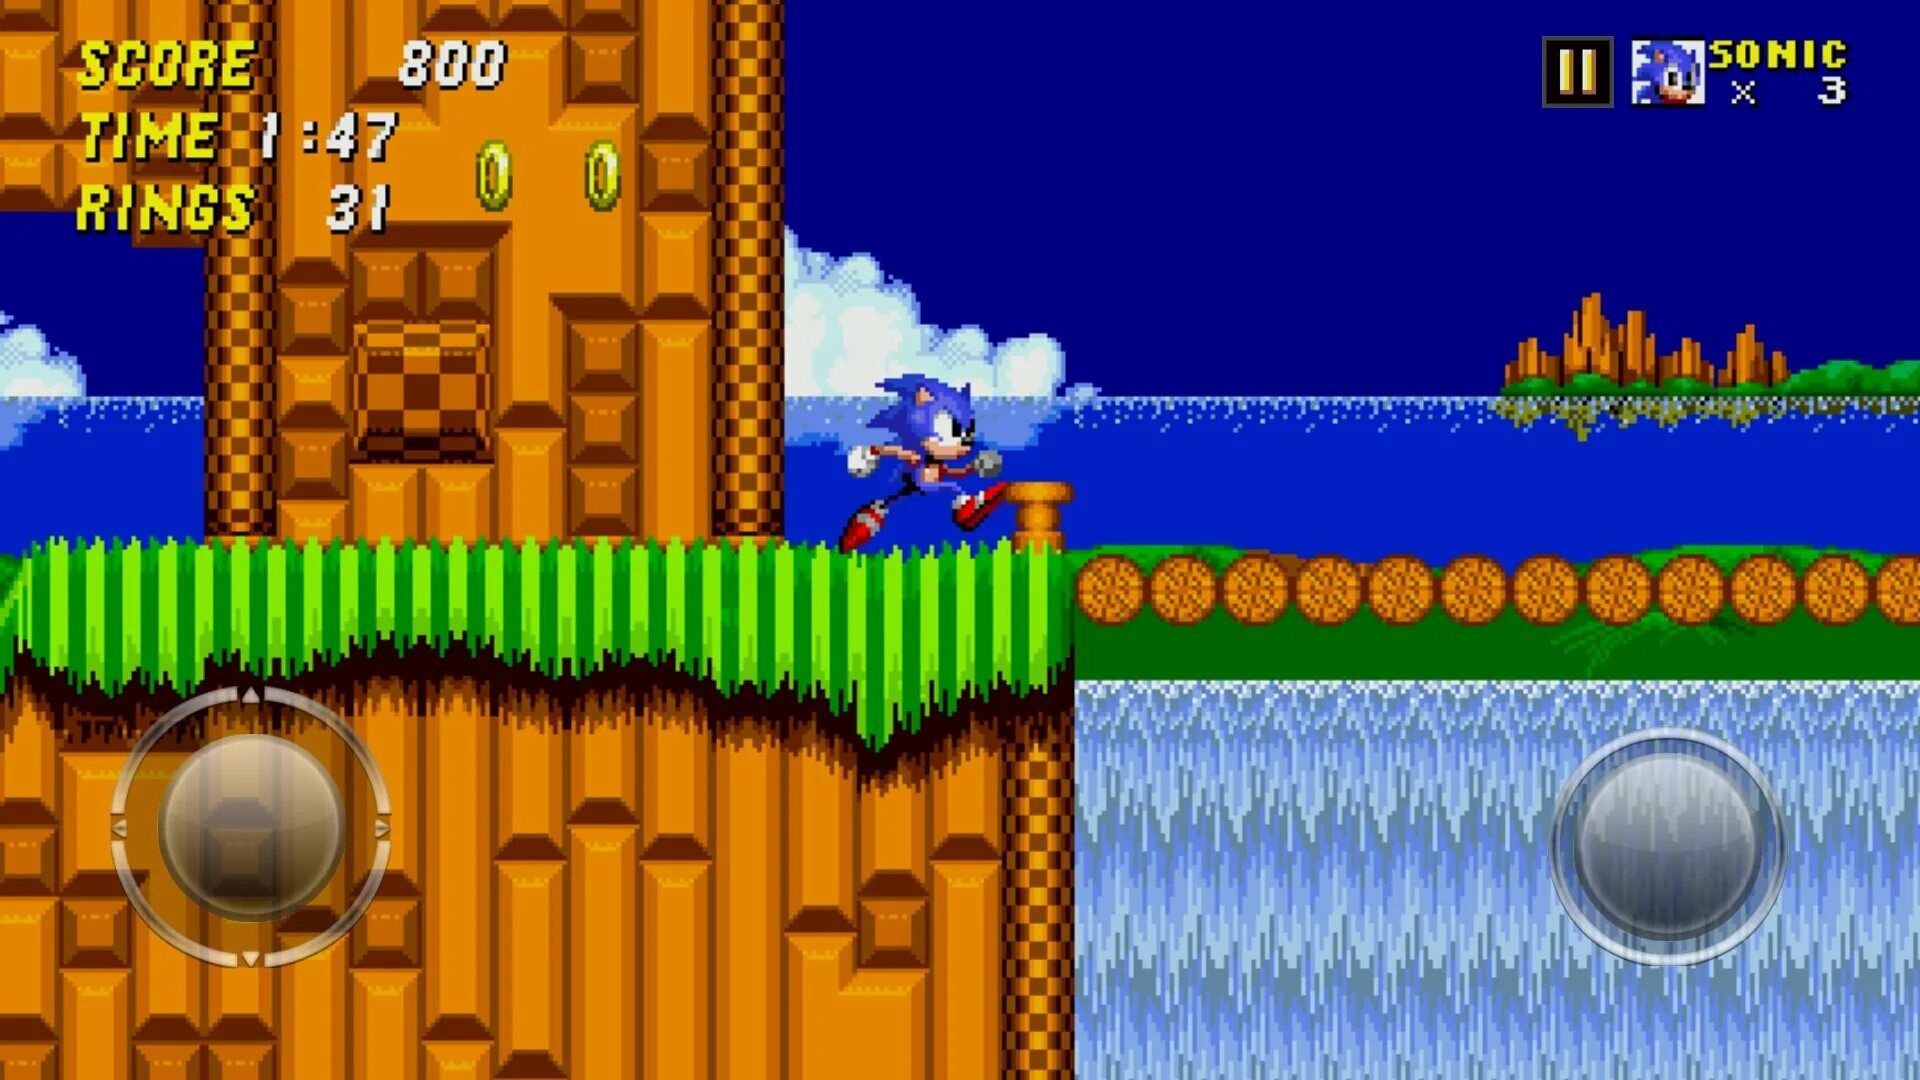 Sonic the Hedgehog 1 16 бит. Соник 2. Коды для Соник 2 на андроид.